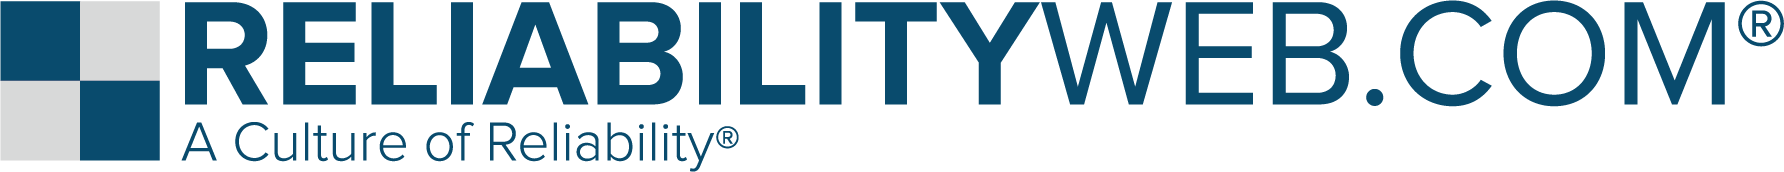 reliabilityweb-logo